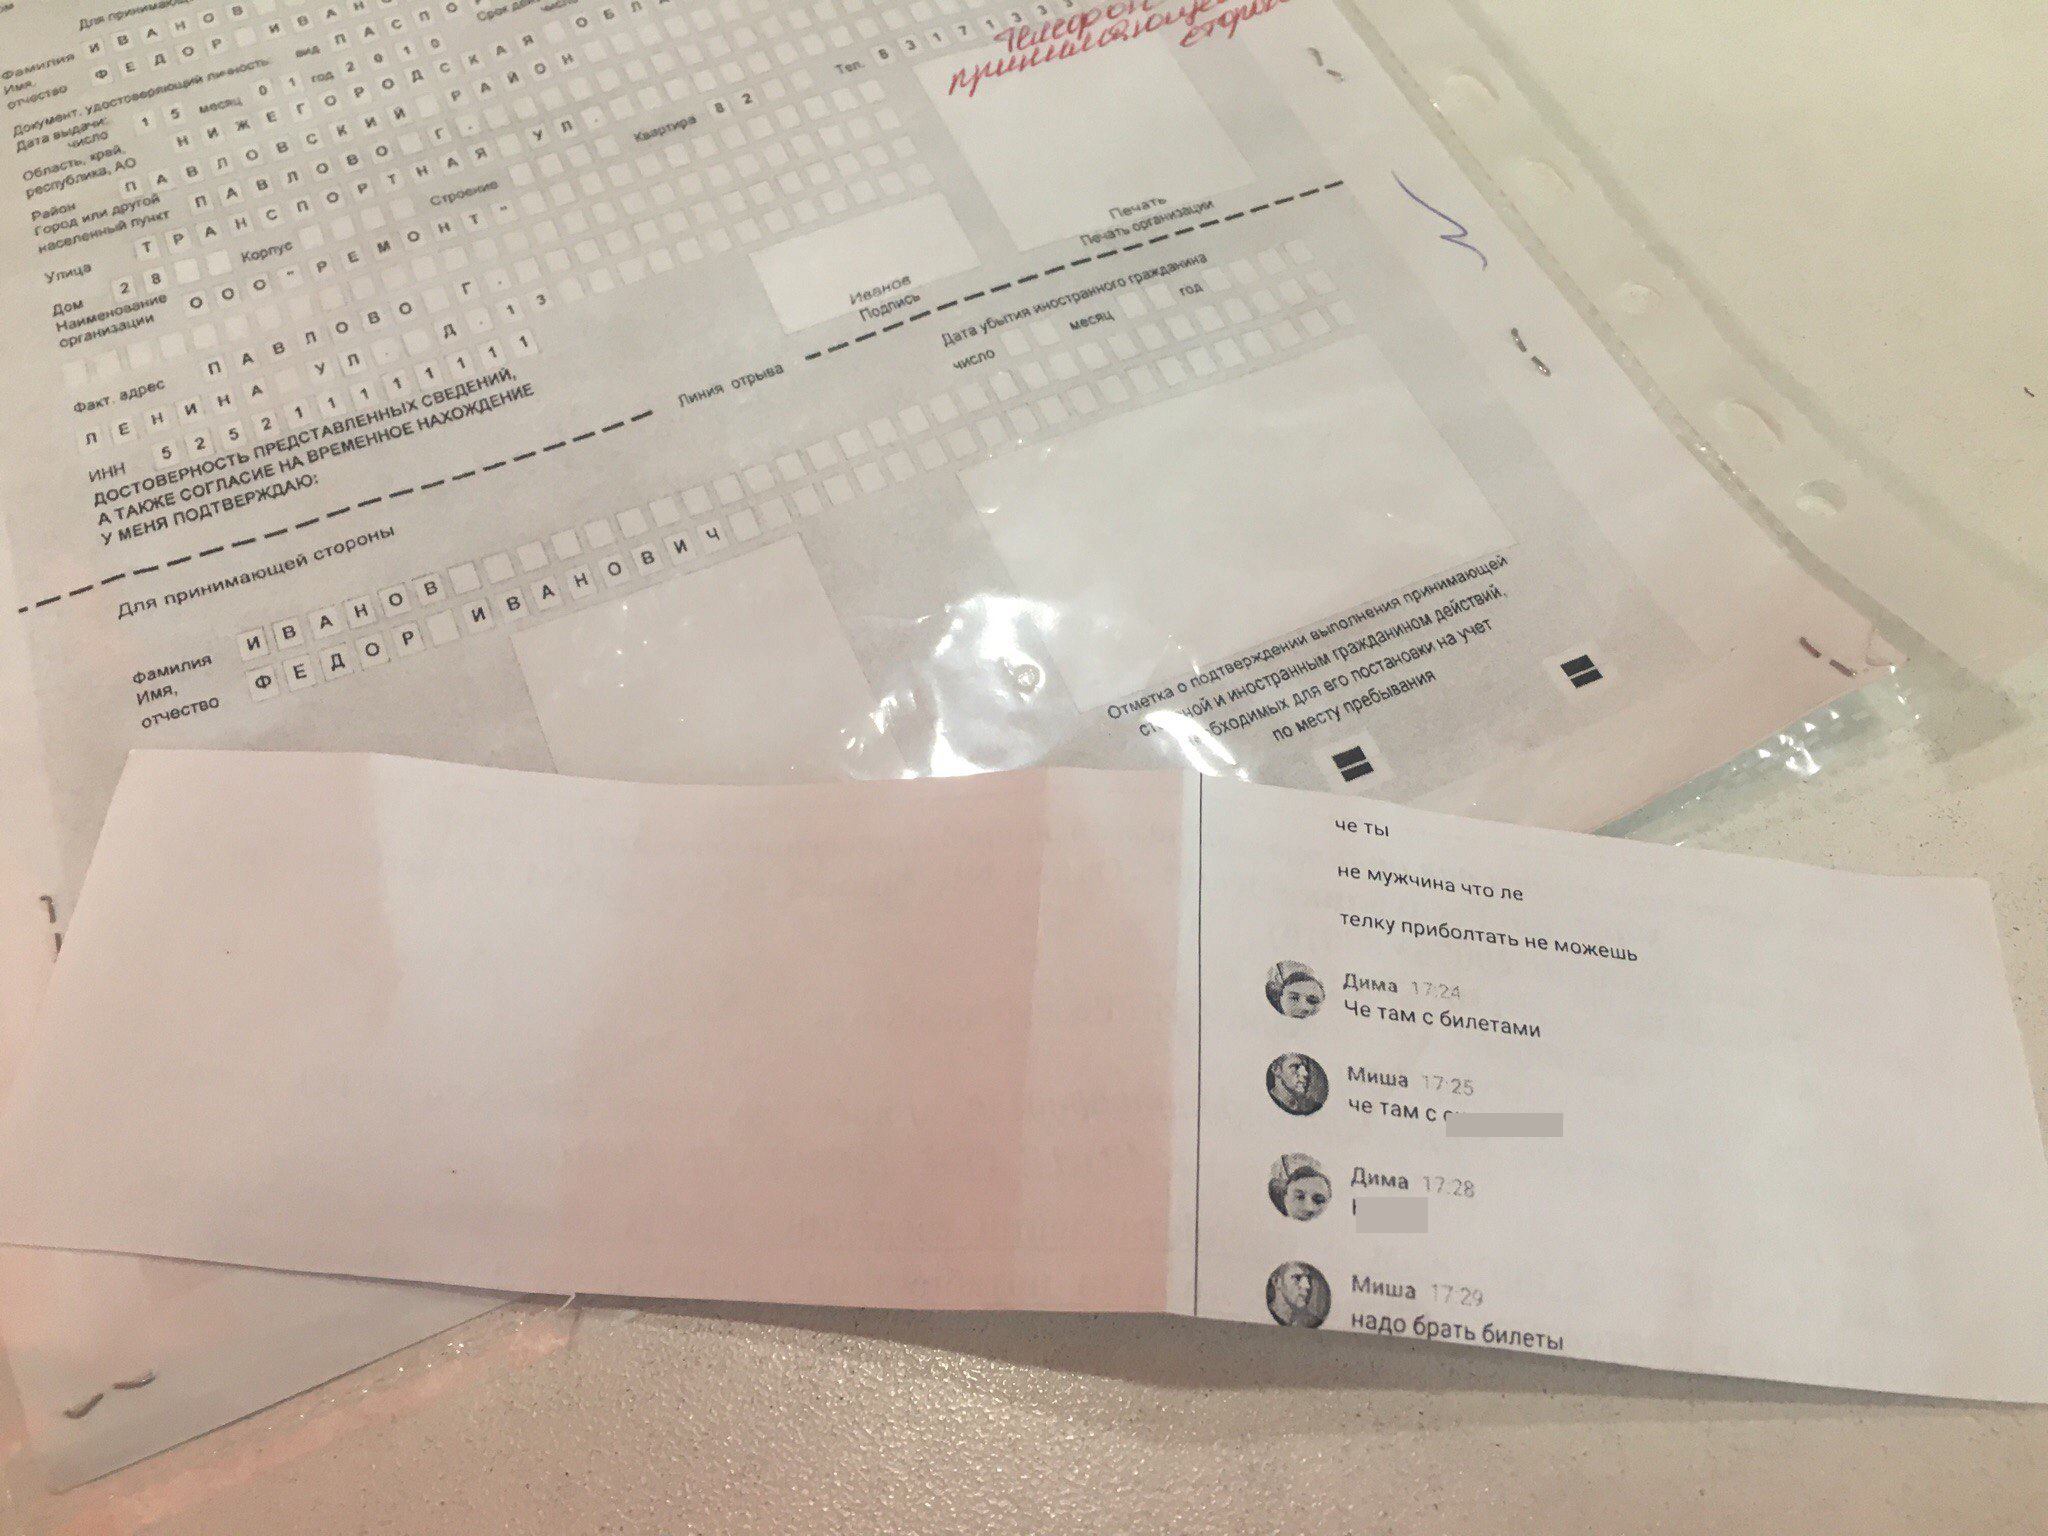 В Коми людям выдают квитанции с ругательствами на обороте листа (фото)